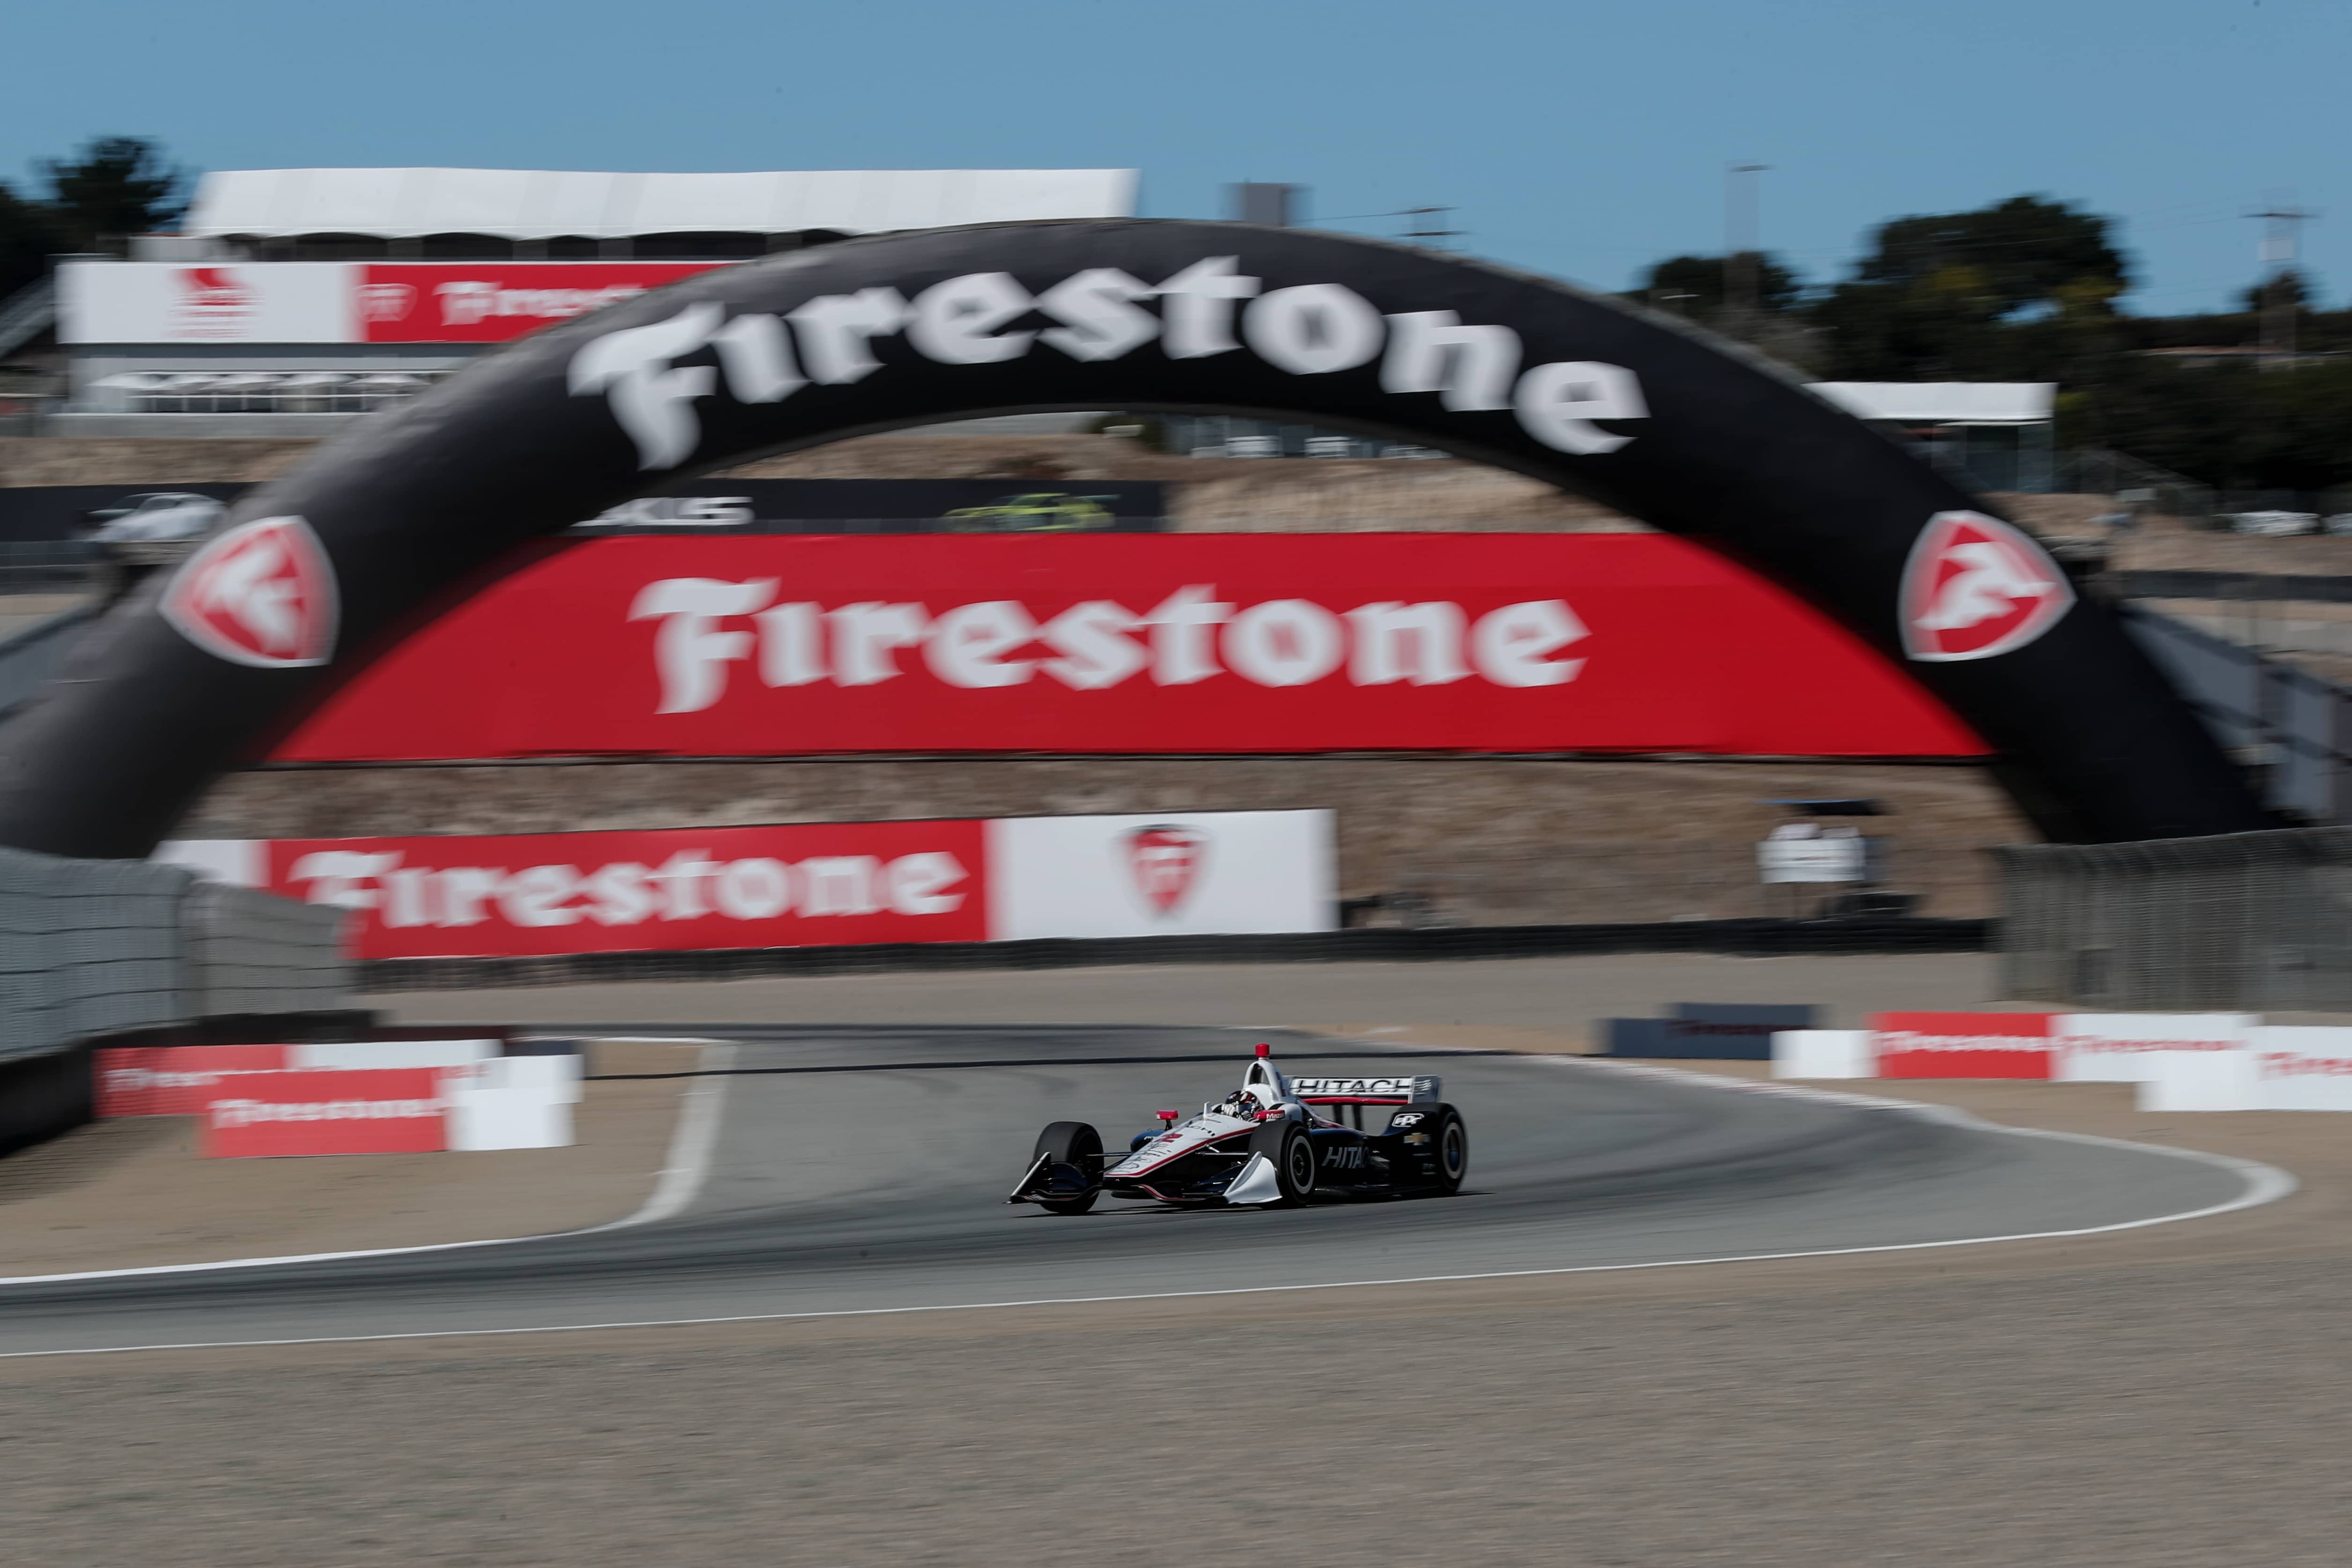 Formula race car on track, under Firestone banner